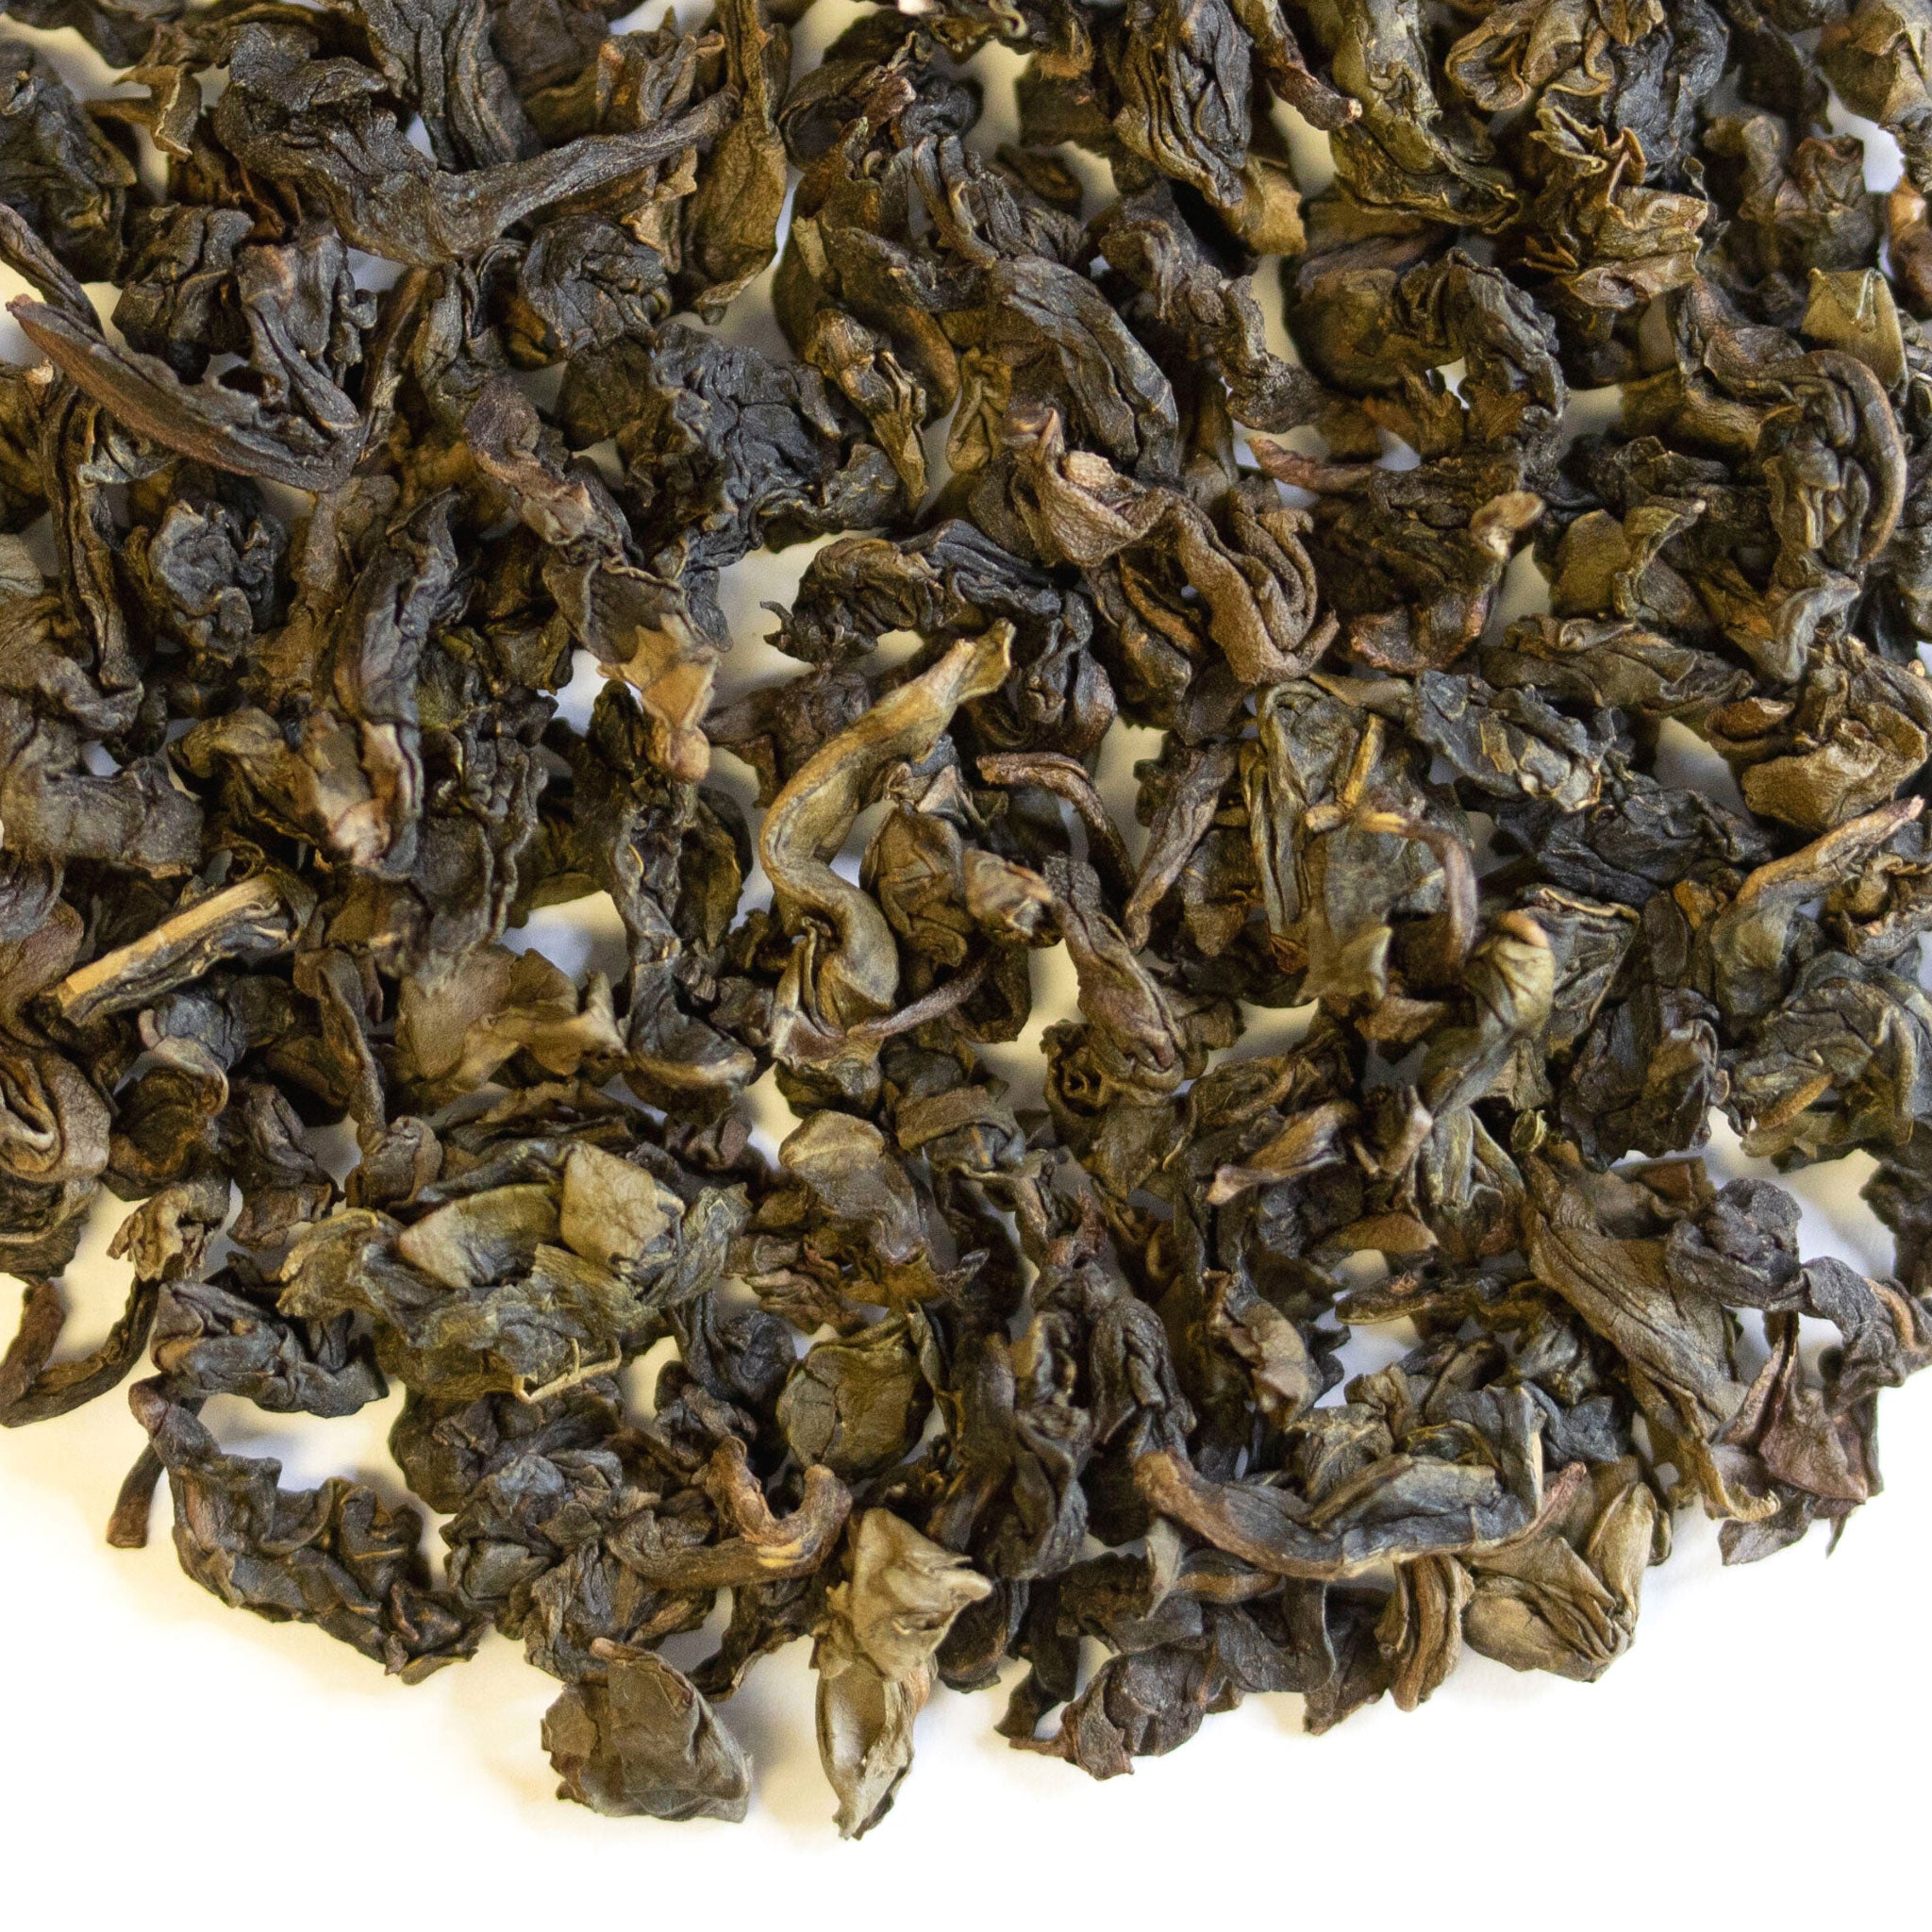 Loose leaf Book of Spells Tieguanyin oolong tea